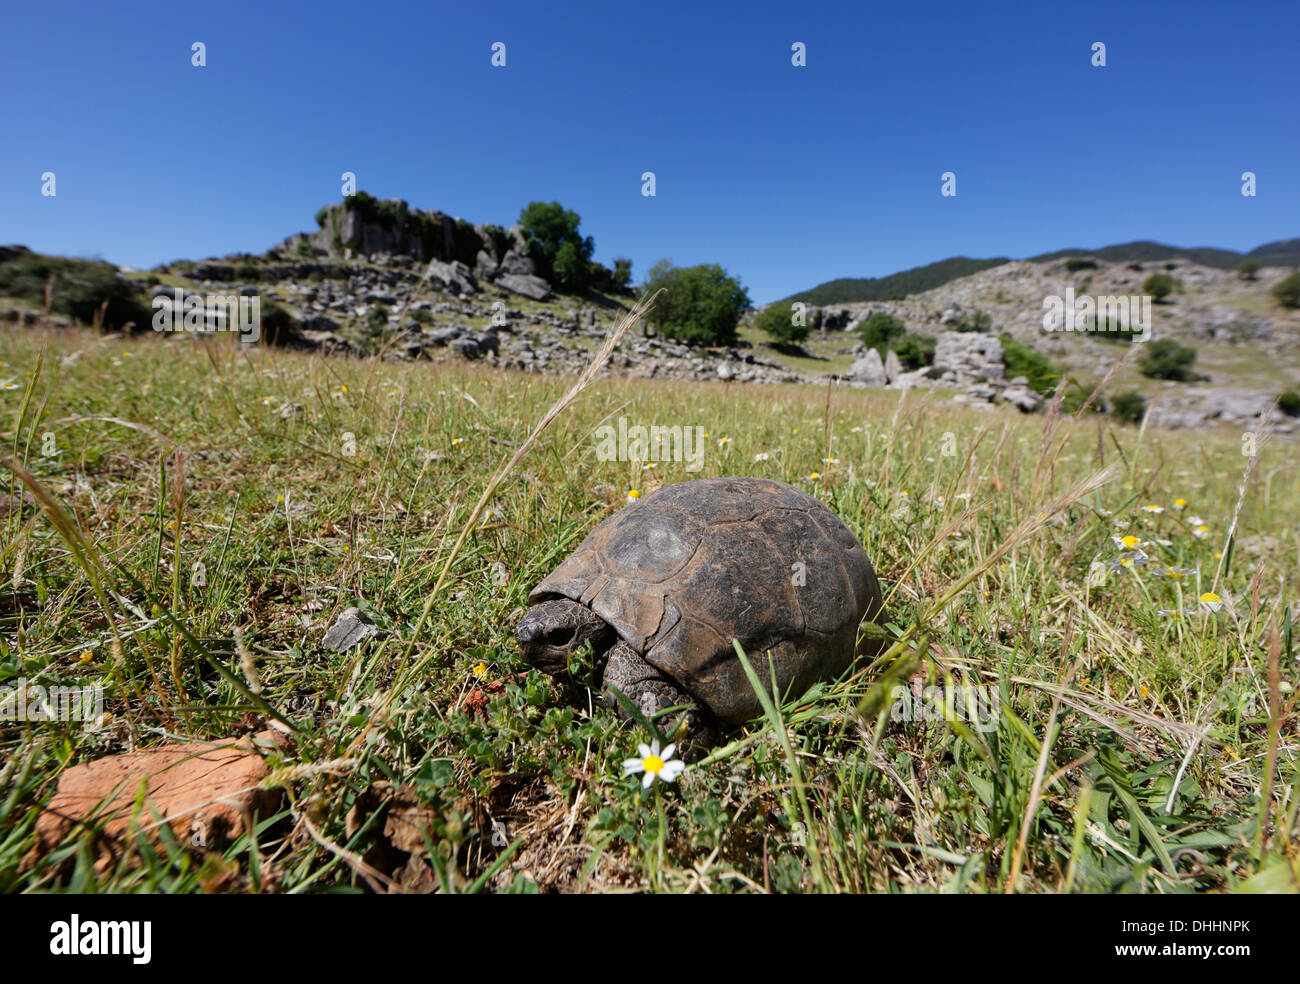 Sperone mediterraneo-thighed tartaruga (Testudo graeca) sull'erba, Köprülü Canyon National Park, Provincia di Antalya, Turchia Foto Stock